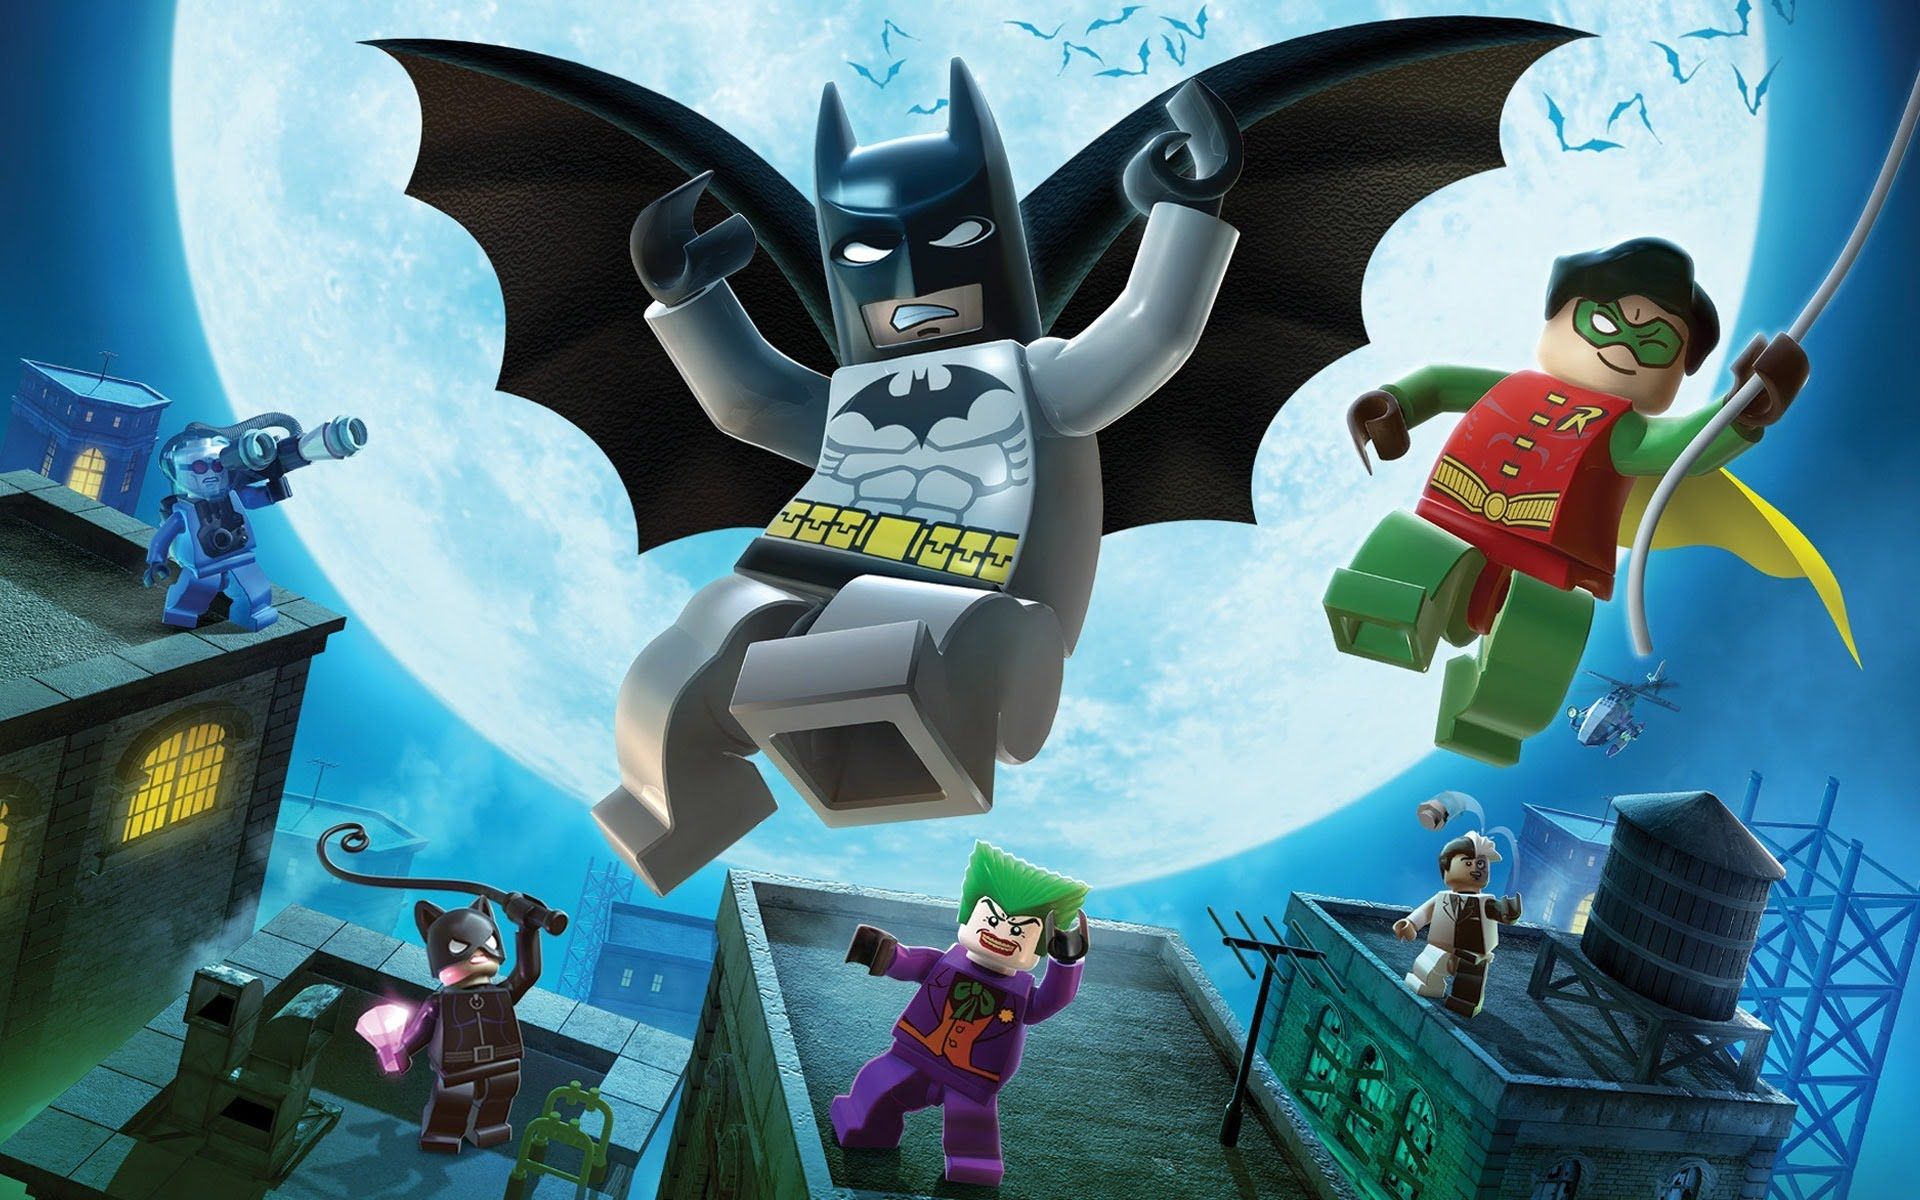 Lego Batman Movie in Development